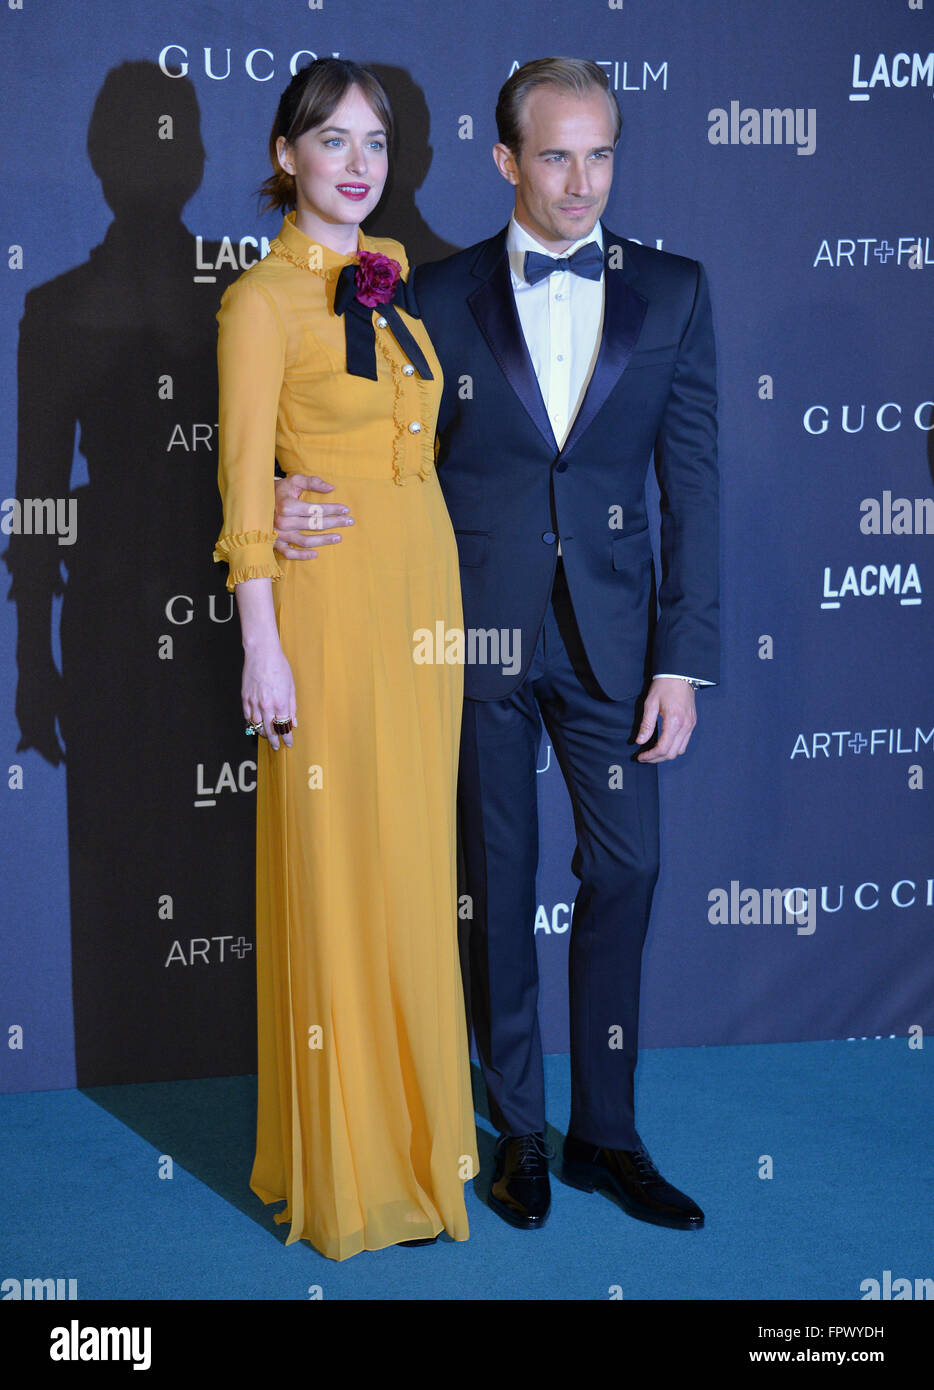 LOS ANGELES, CA - 7. November 2015: Schauspielerin Dakota Johnson & Schauspieler Jesse Johnson bei der 2015 LACMA Kunst + Film-Gala in Los Angeles County Museum of Art. Stockfoto